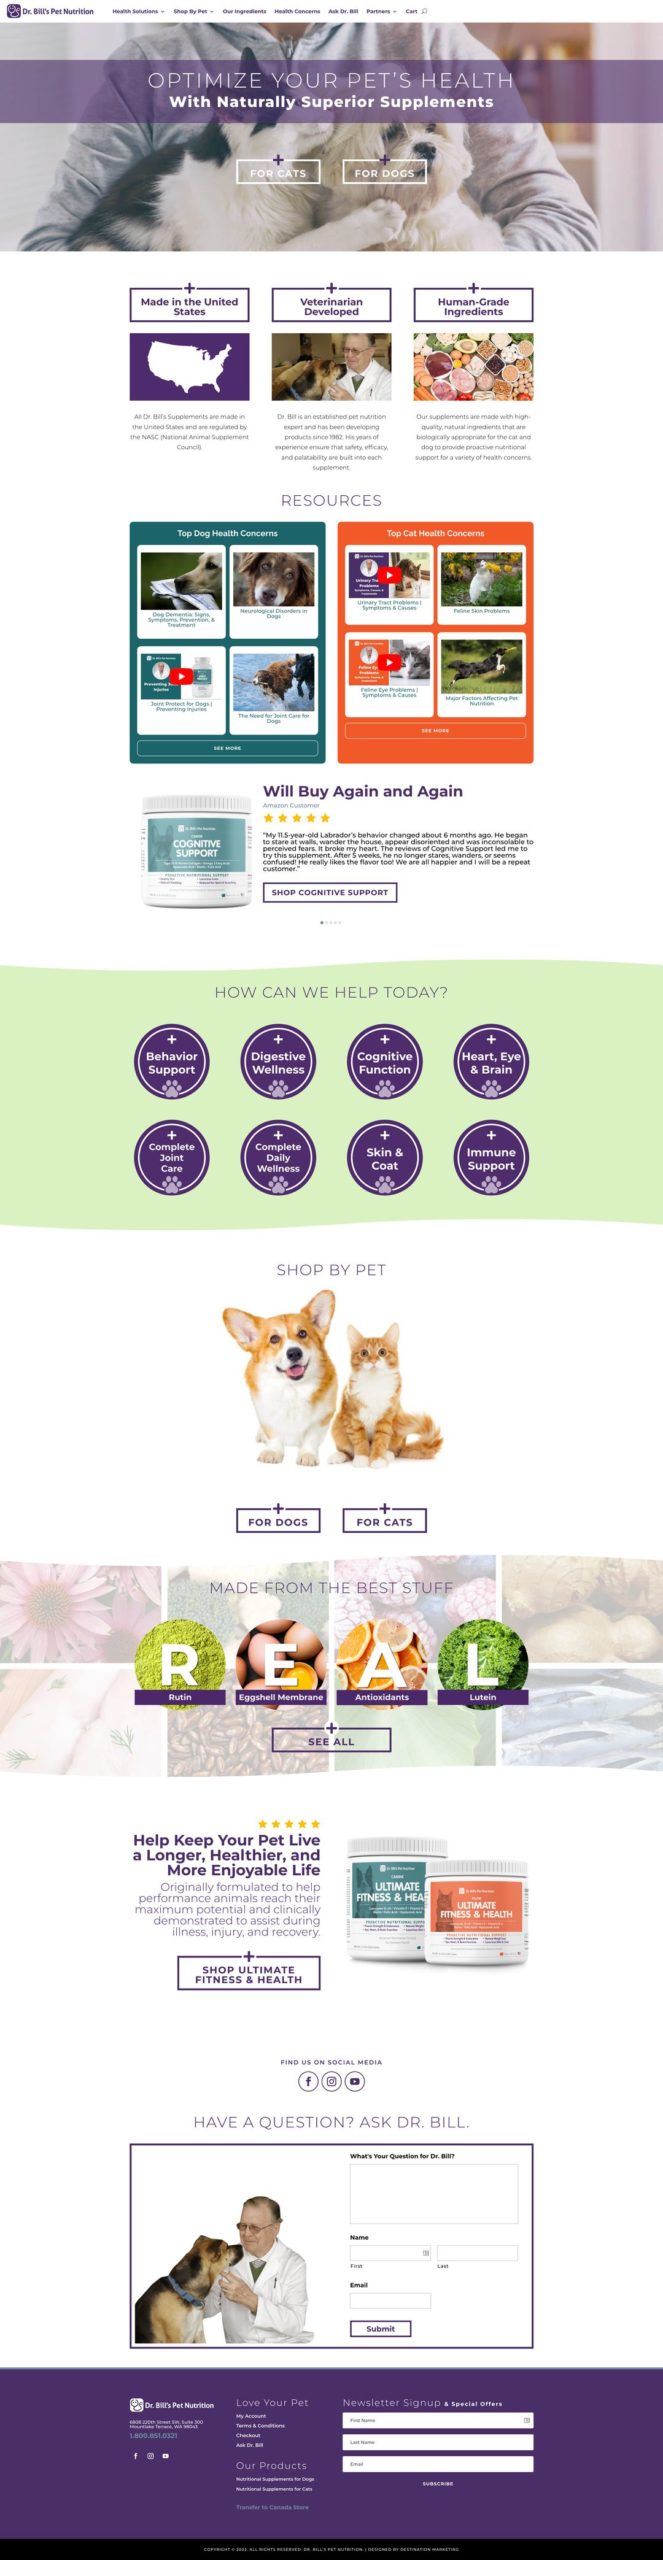 eCommerce Website Design: Dr. Bill's Pet Nutrition